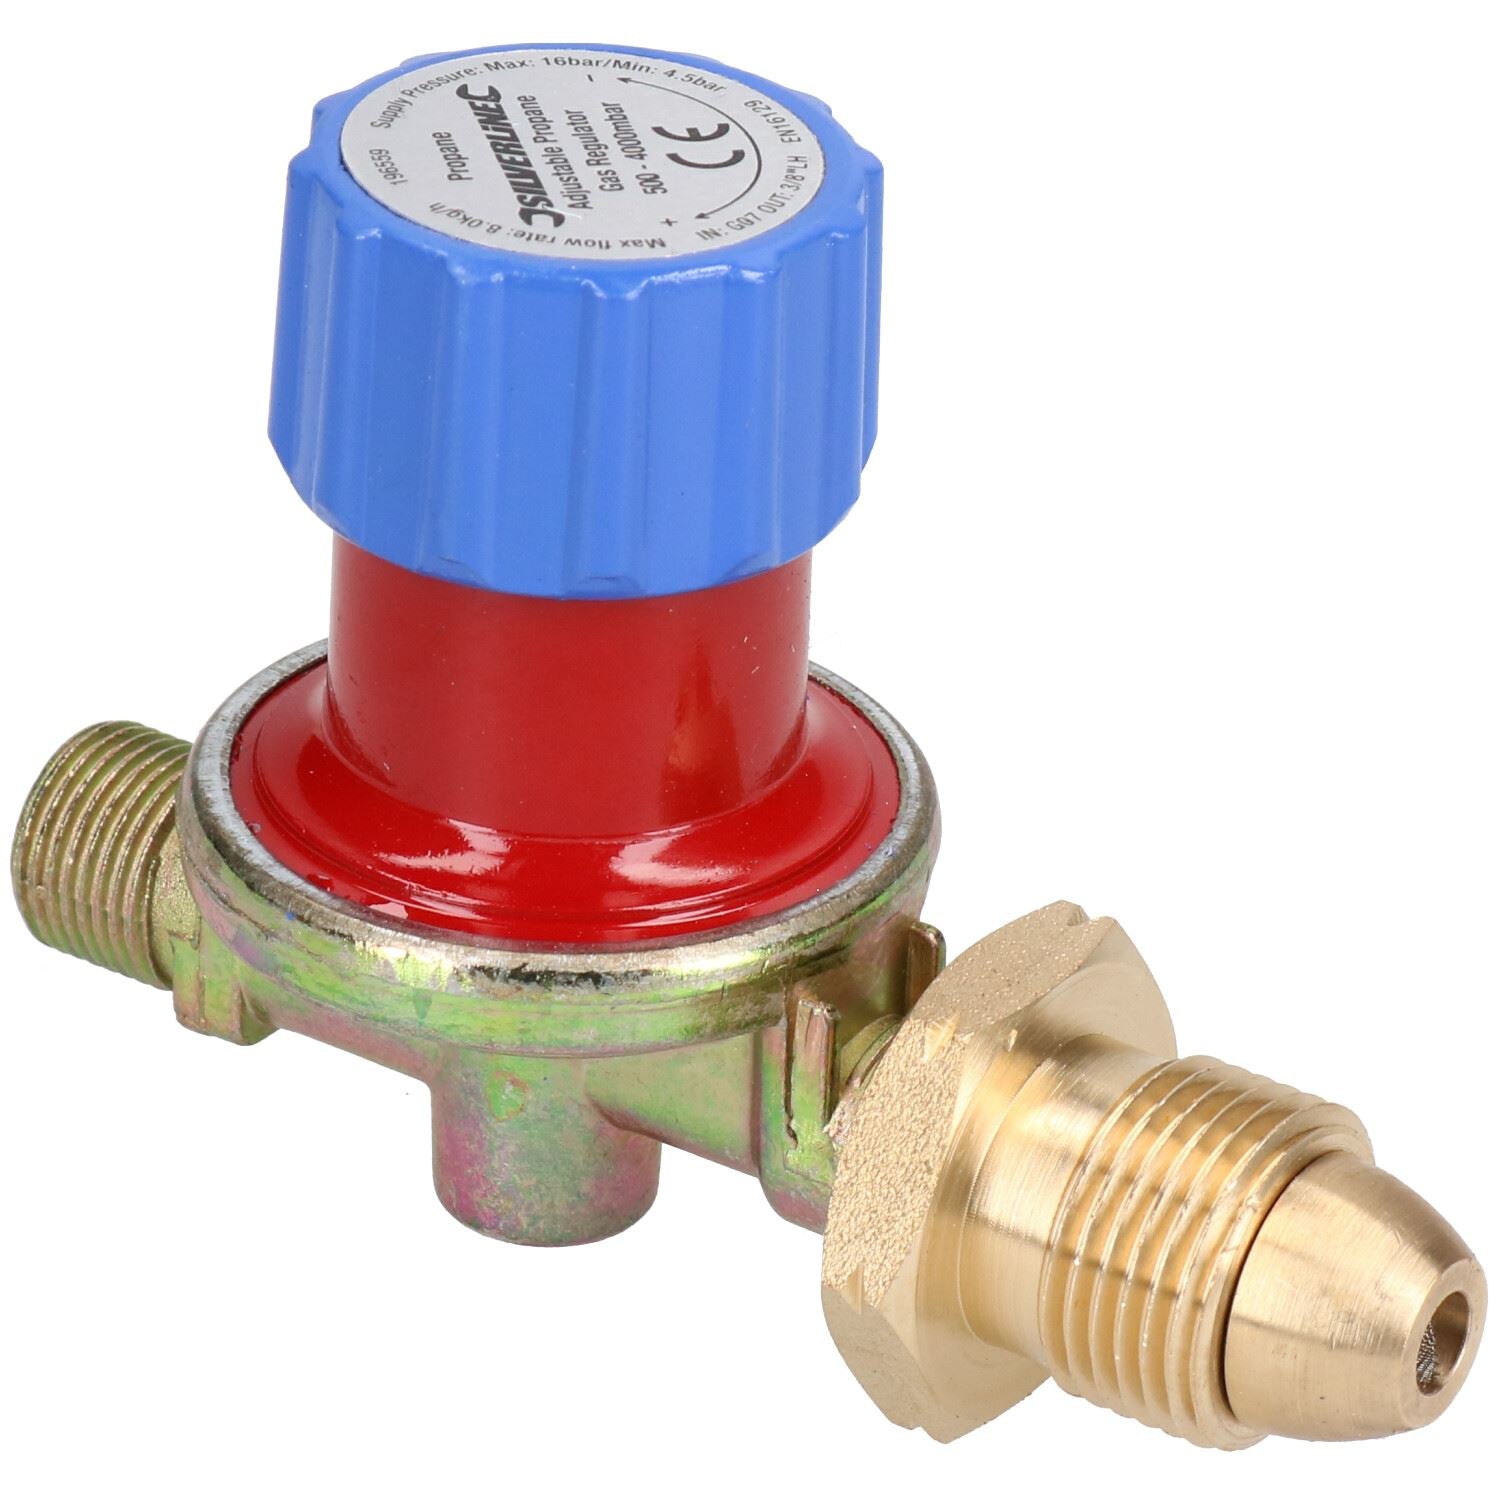 Variable Propane Gas Regulator 0.5 to 4 BAR For Calor Gas Bottles etc SIL215